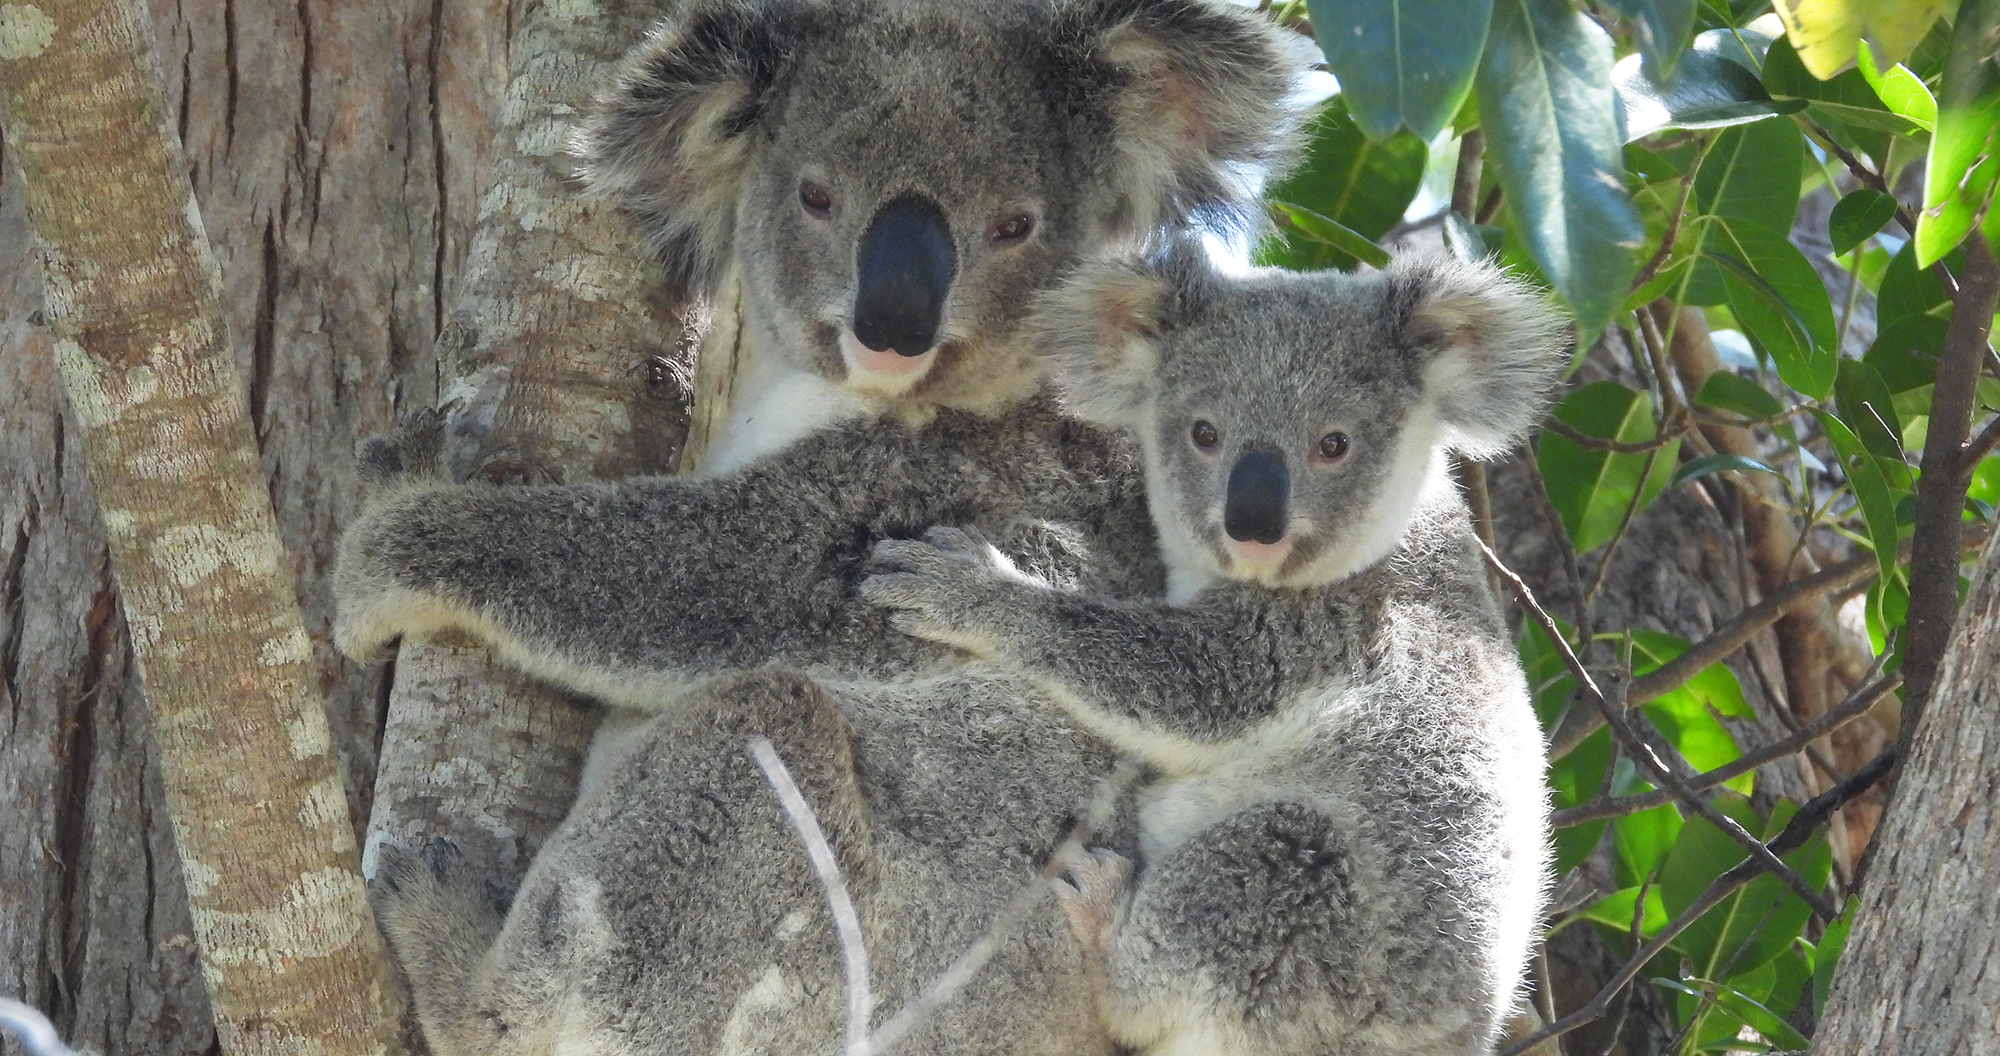 Contact Friends of the Koala